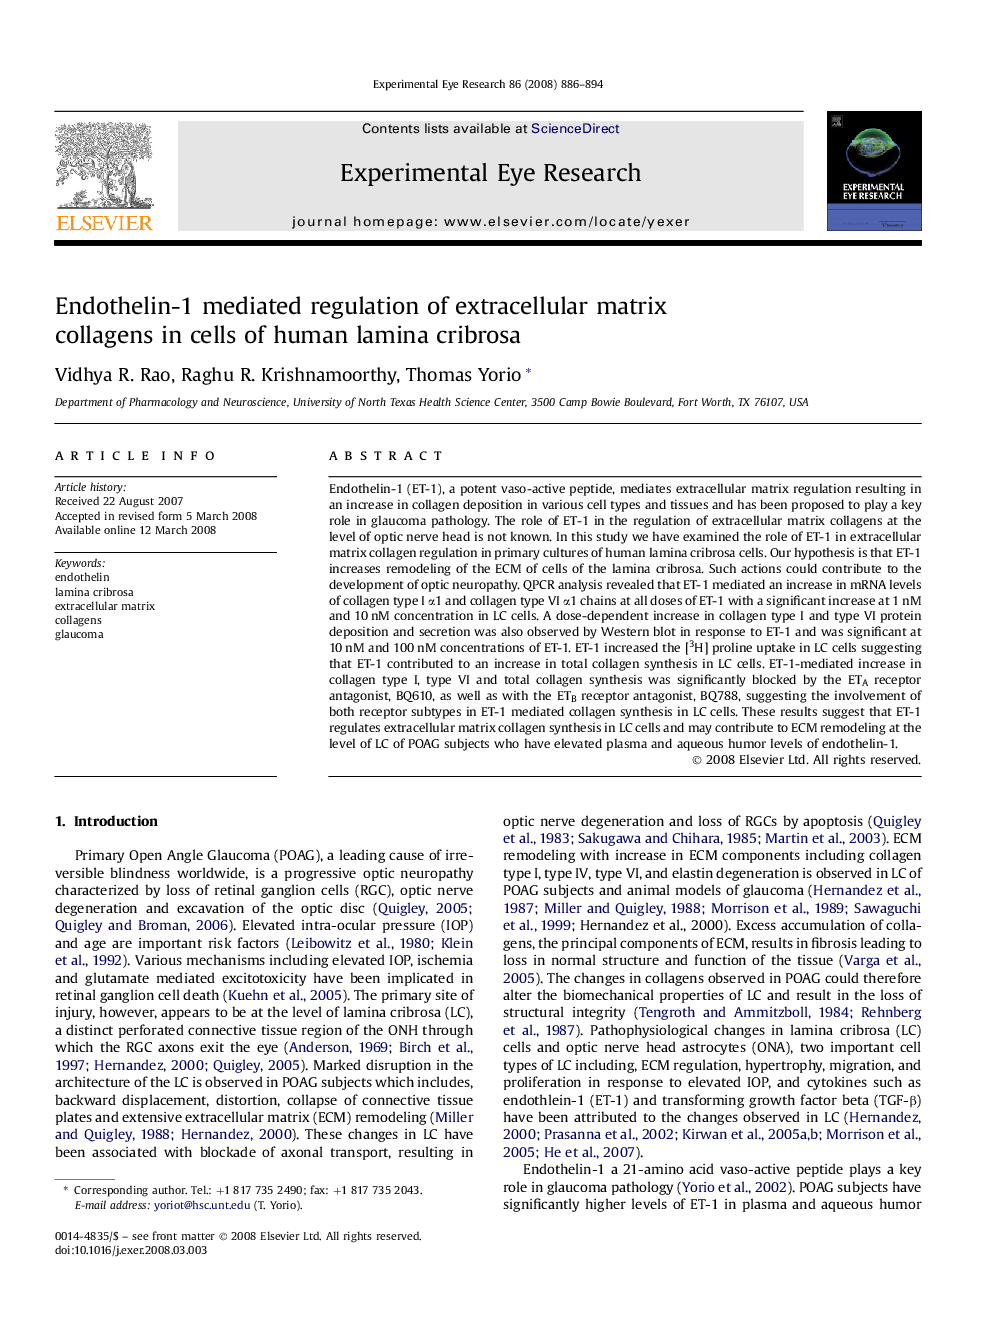 Endothelin-1 mediated regulation of extracellular matrix collagens in cells of human lamina cribrosa